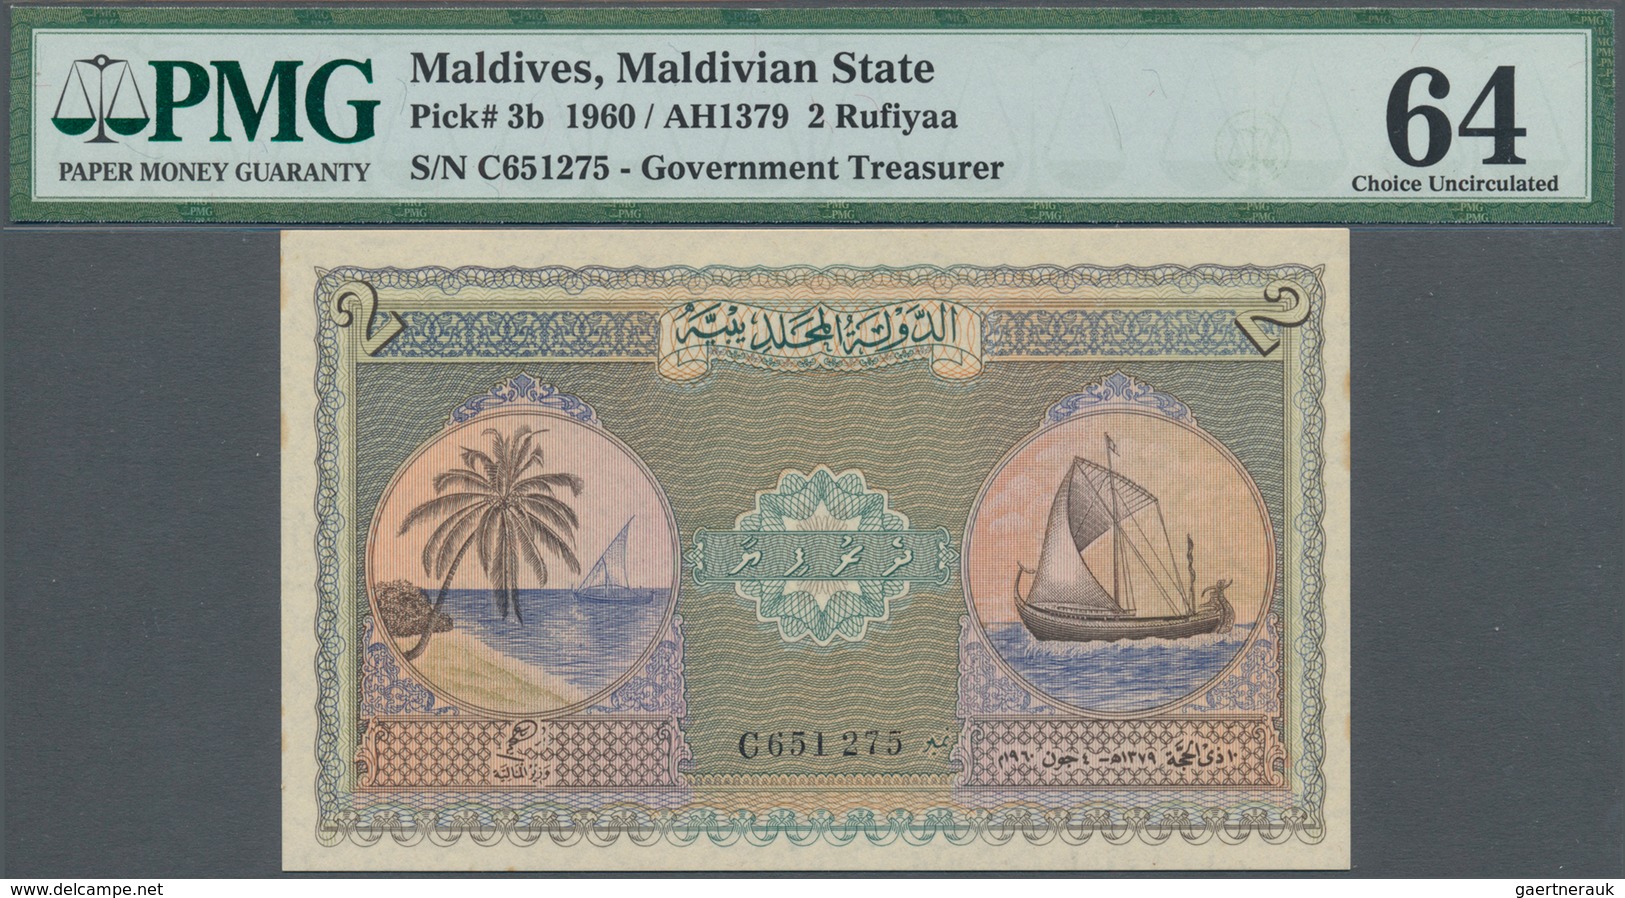 01999 Maldives / Malediven: Set Of 6 Notes Containing 1 To 100 Rupees 1960 P. 2b-7b, All PMG Graded 64 Cho - Maldives